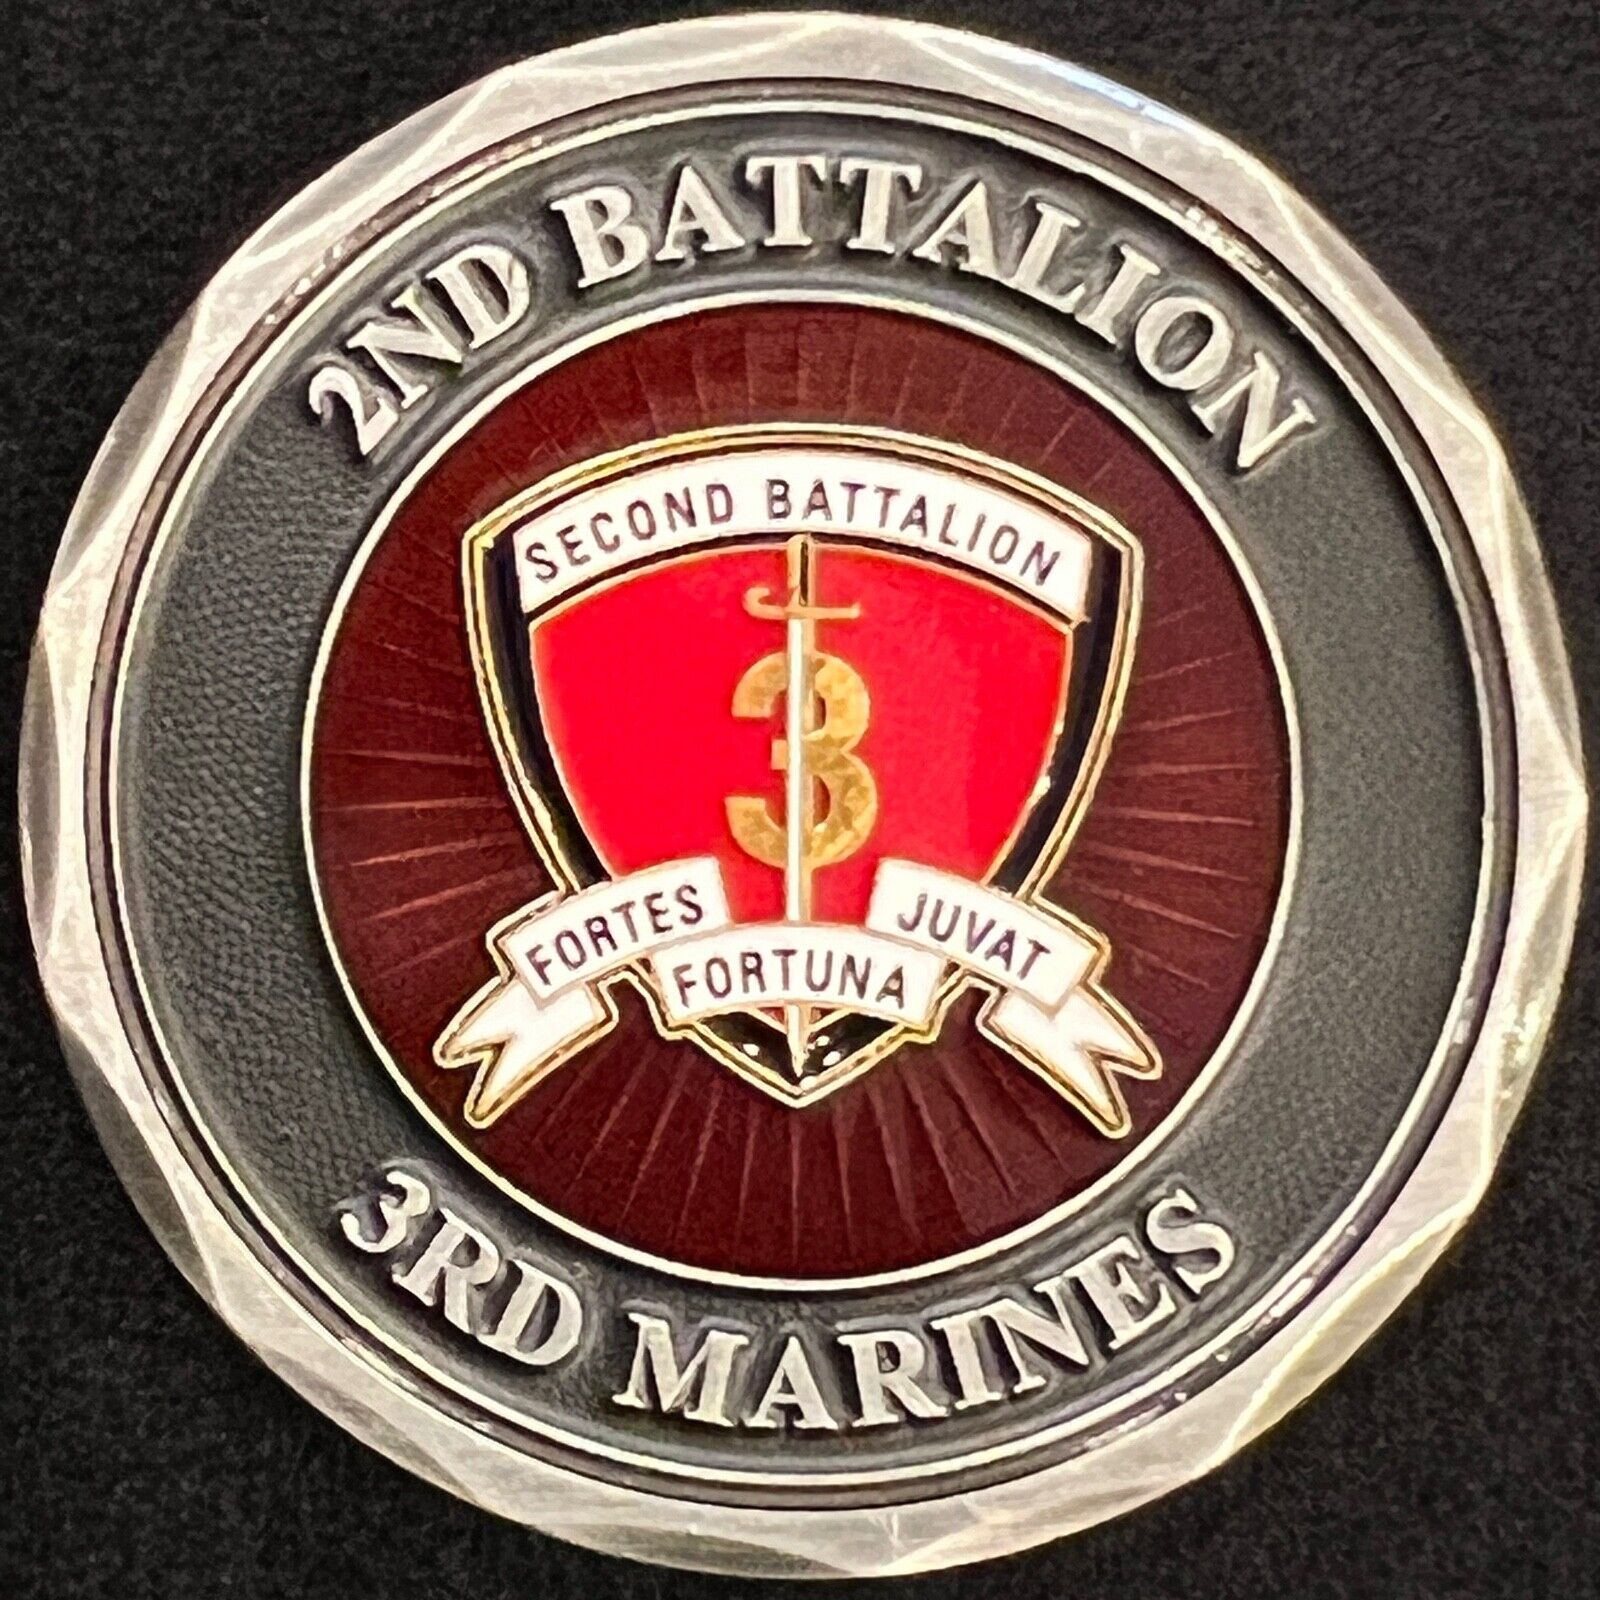 2nd Battalion 3rd Marines USMC Challenge Coin